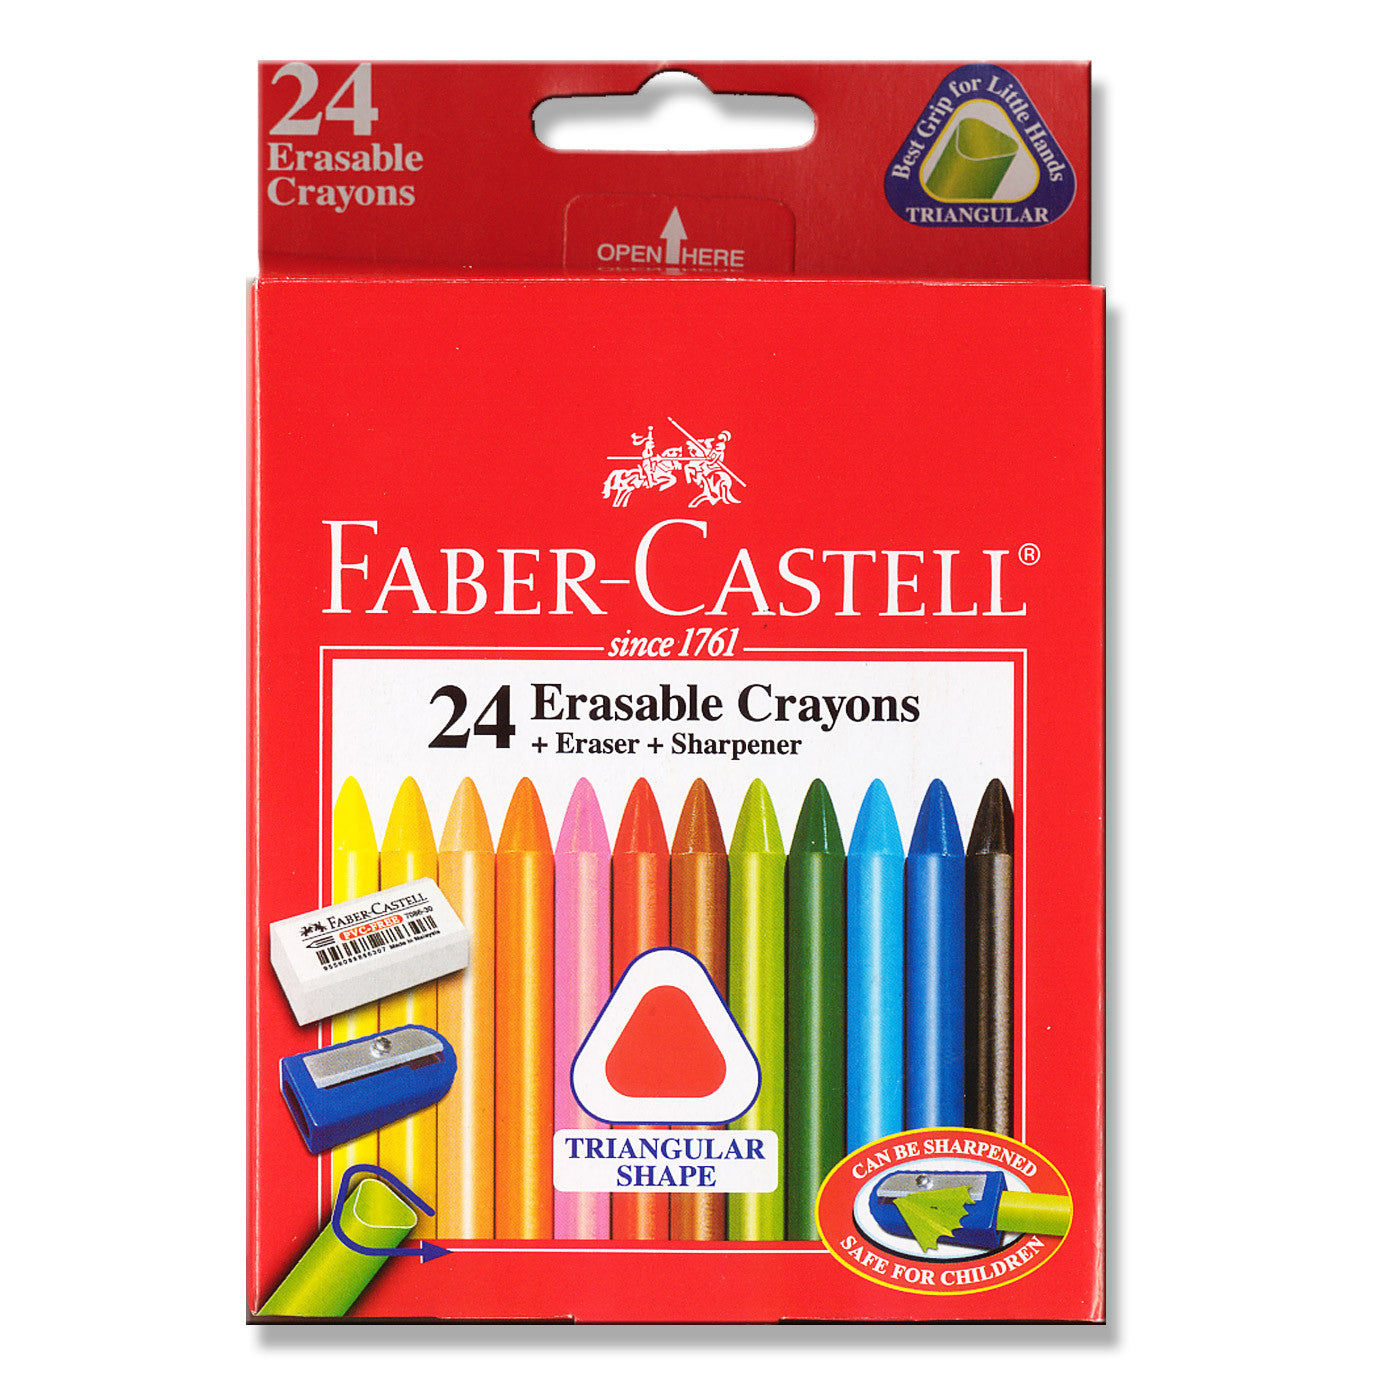 Faber-Castell Triangular Erasable Crayons 24 Pack